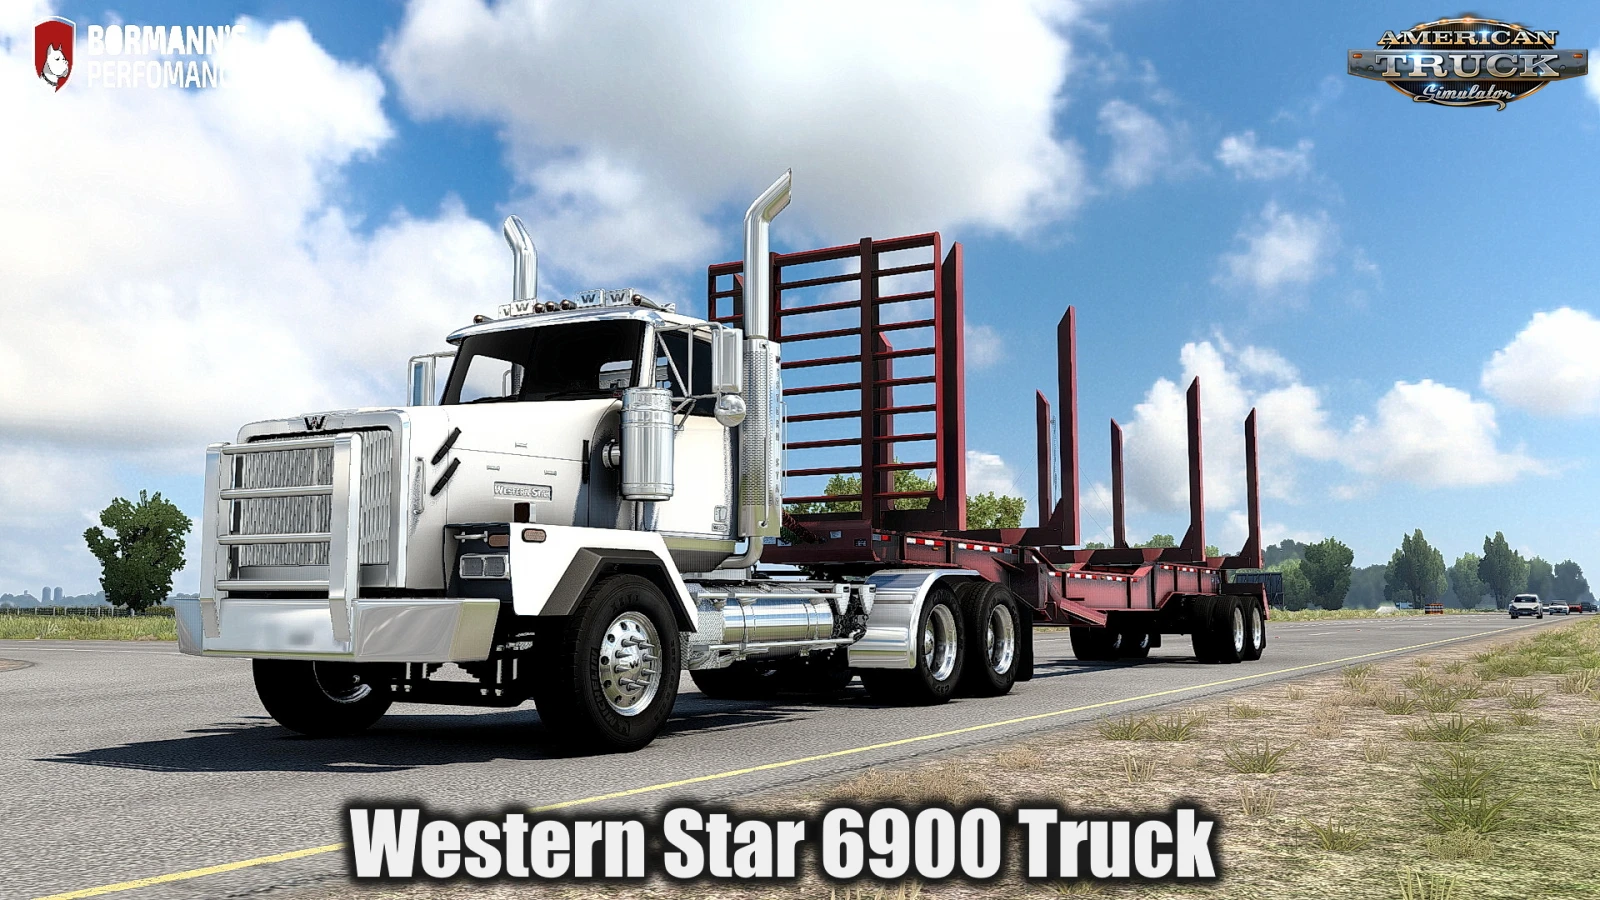 Western Star 6900 Truck + Interior v1.0 (1.48.x) for ATS